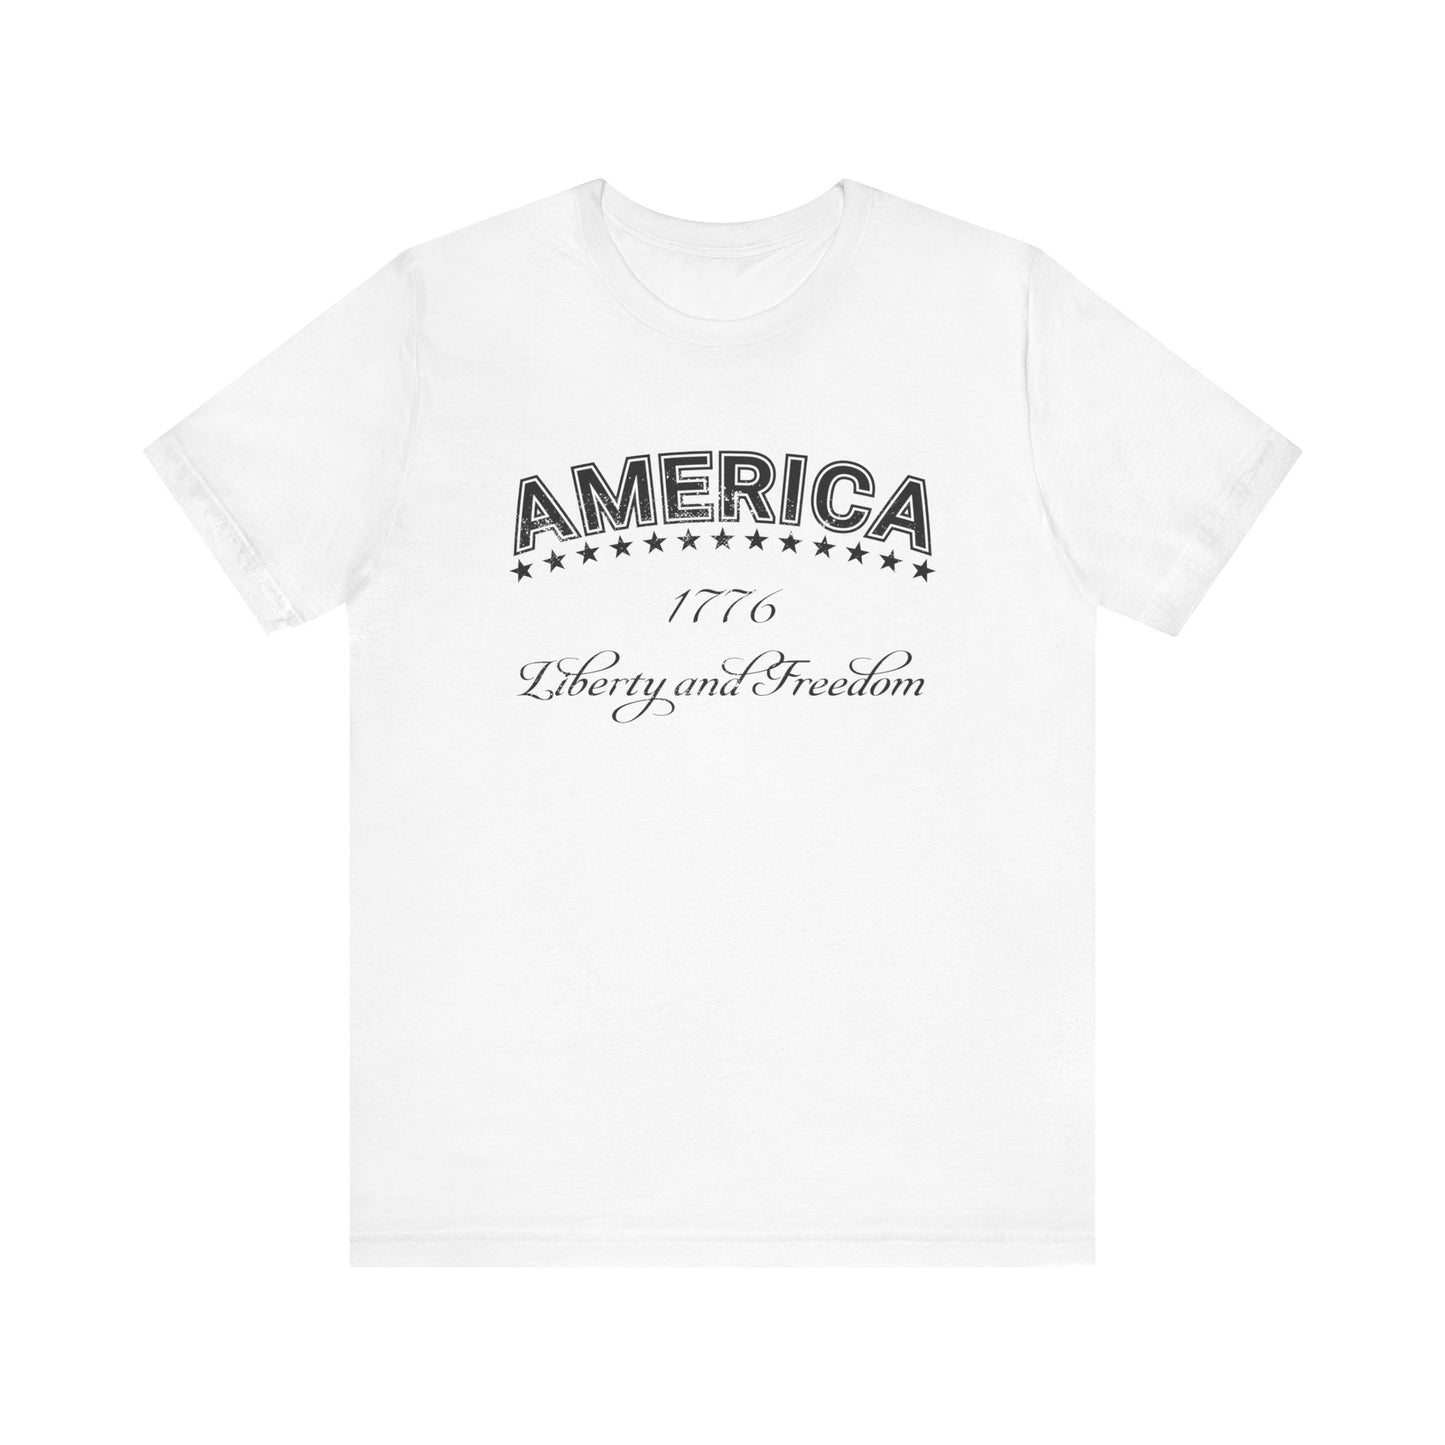 Liberty and Freedom Shirt, July 4th Shirt, Independence Day Shirt, Patriotic Shirt, American Shirt, USA Shirt, America T-Shirt, July 4 Shirt